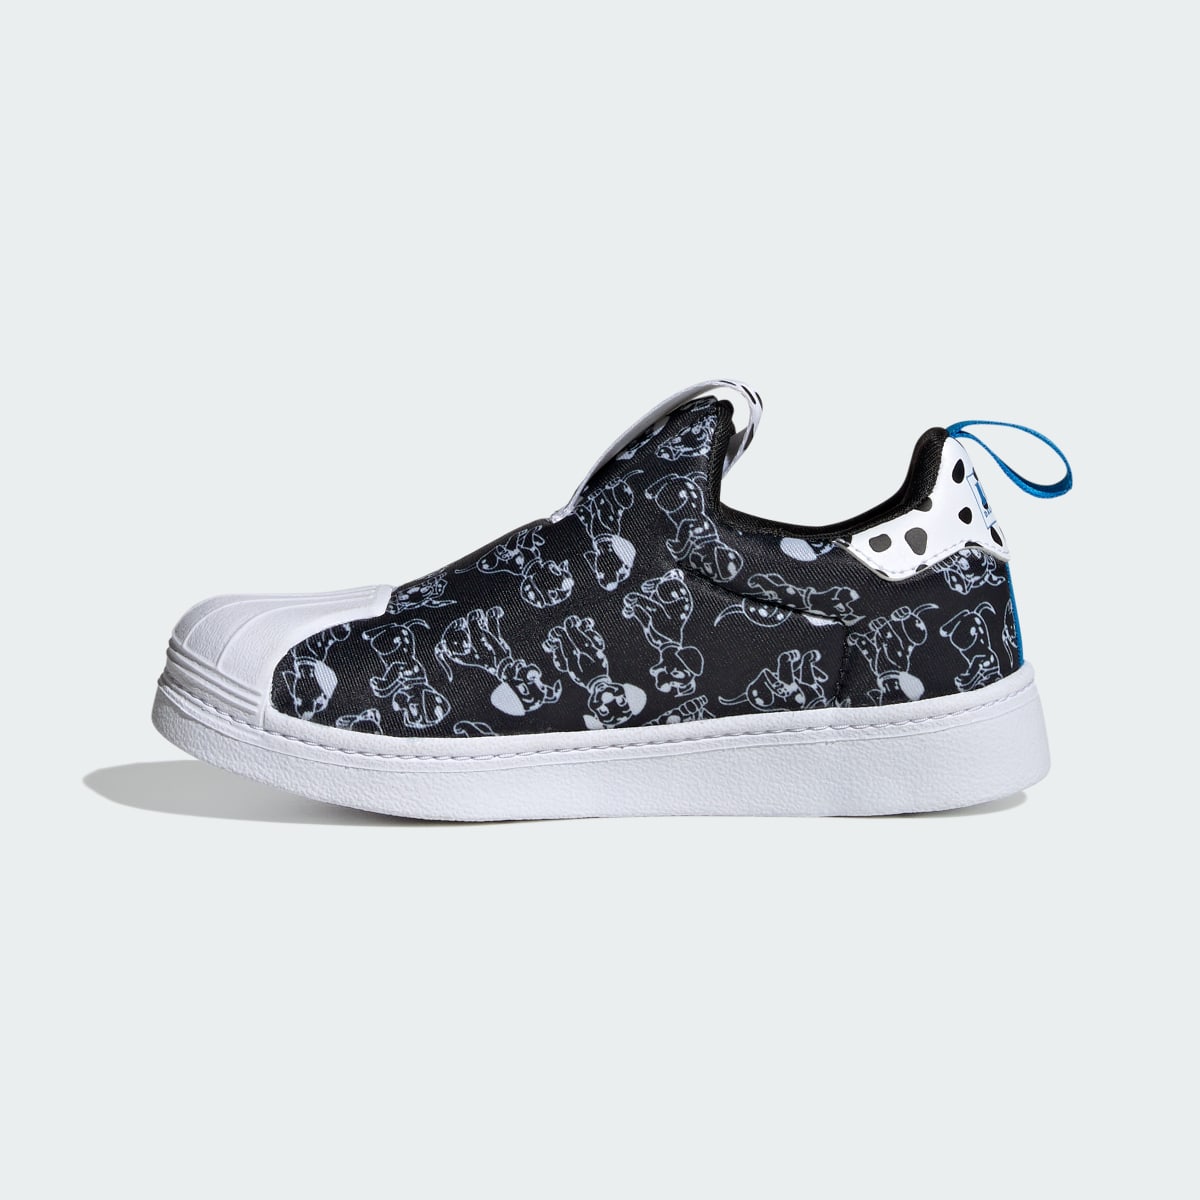 Adidas Originals x Disney 101 Dalmatians Superstar 360 Shoes Kids. 7